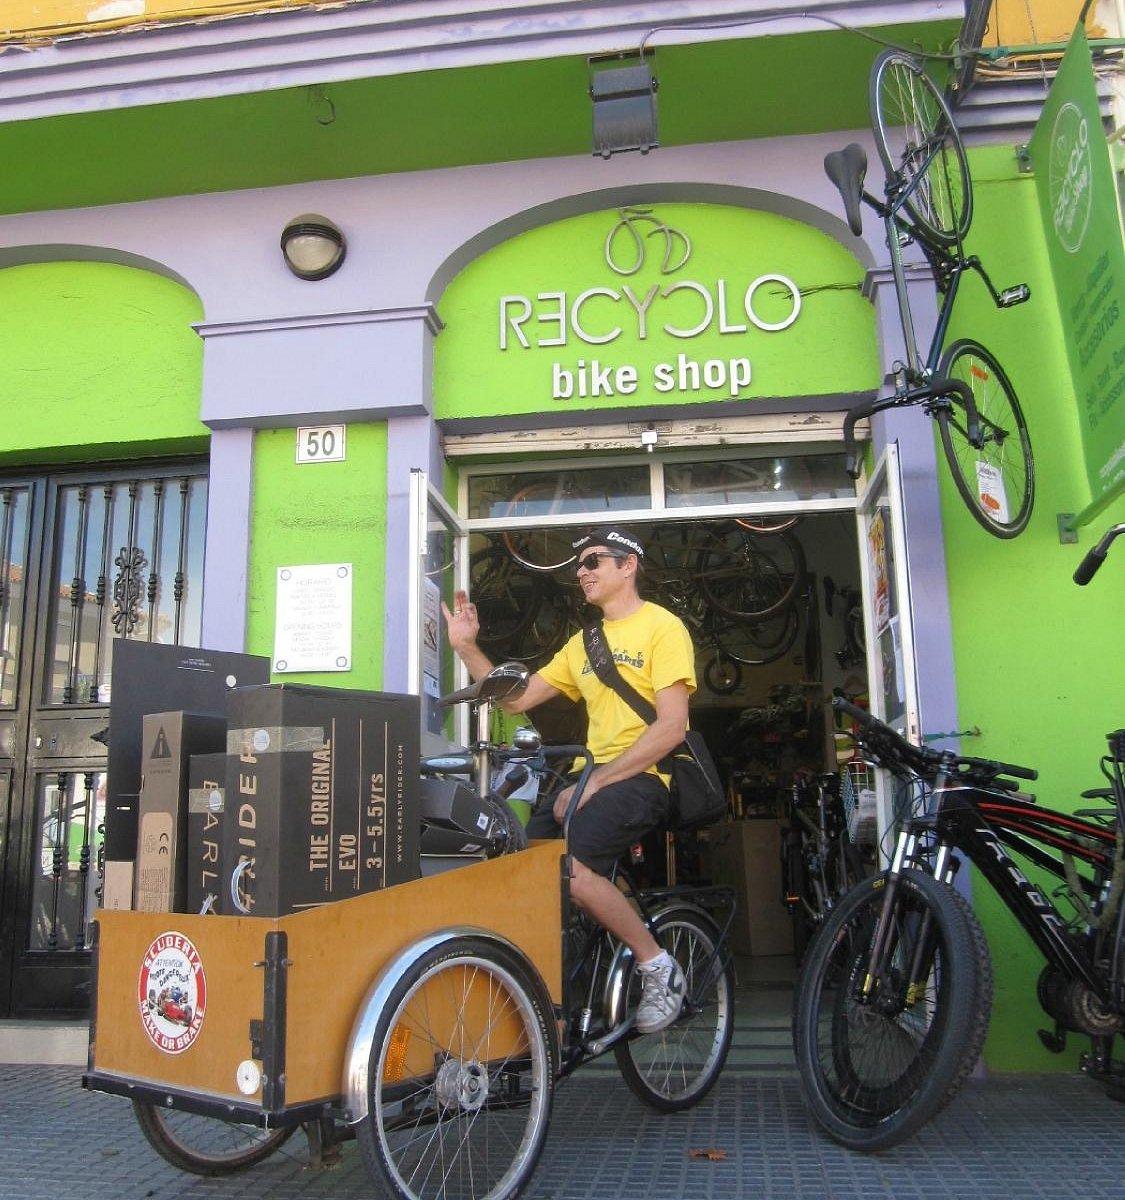 Recyclo Bike-de